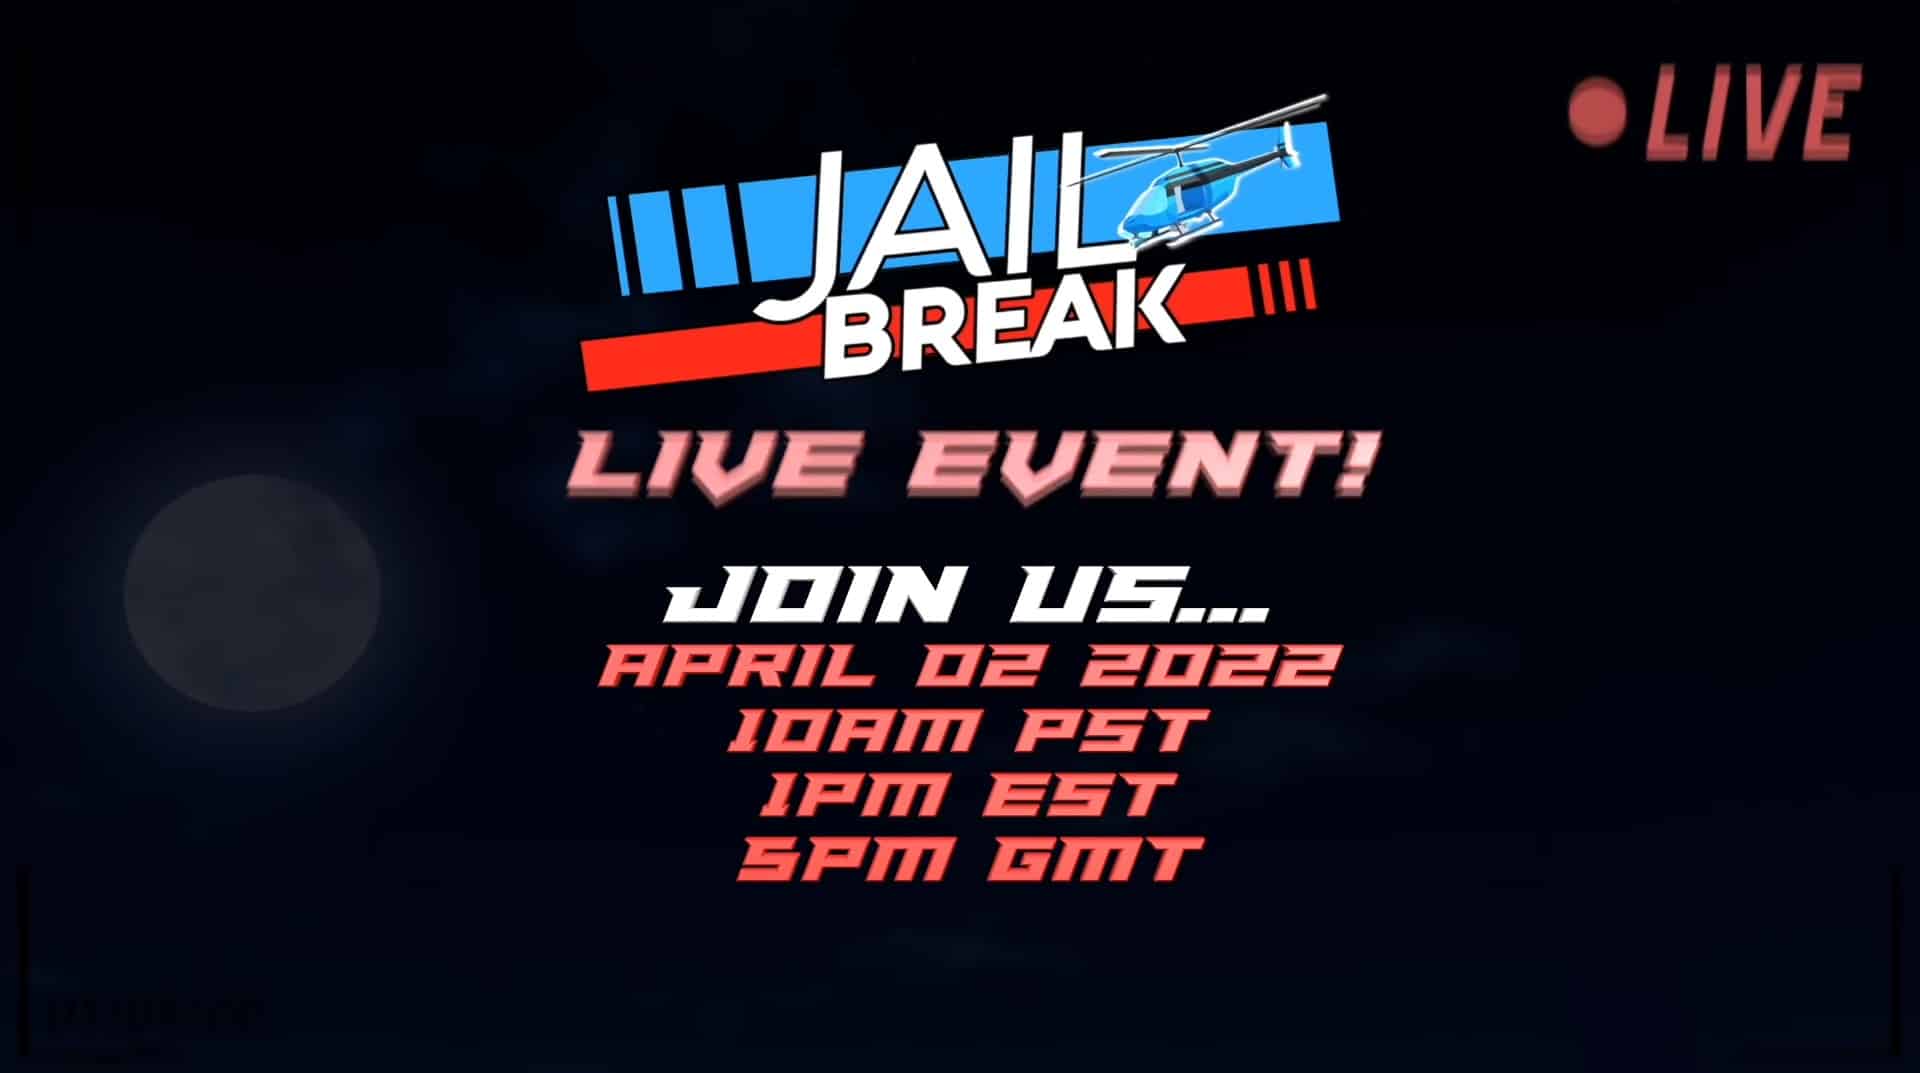 Jailbreak live event announcement poster